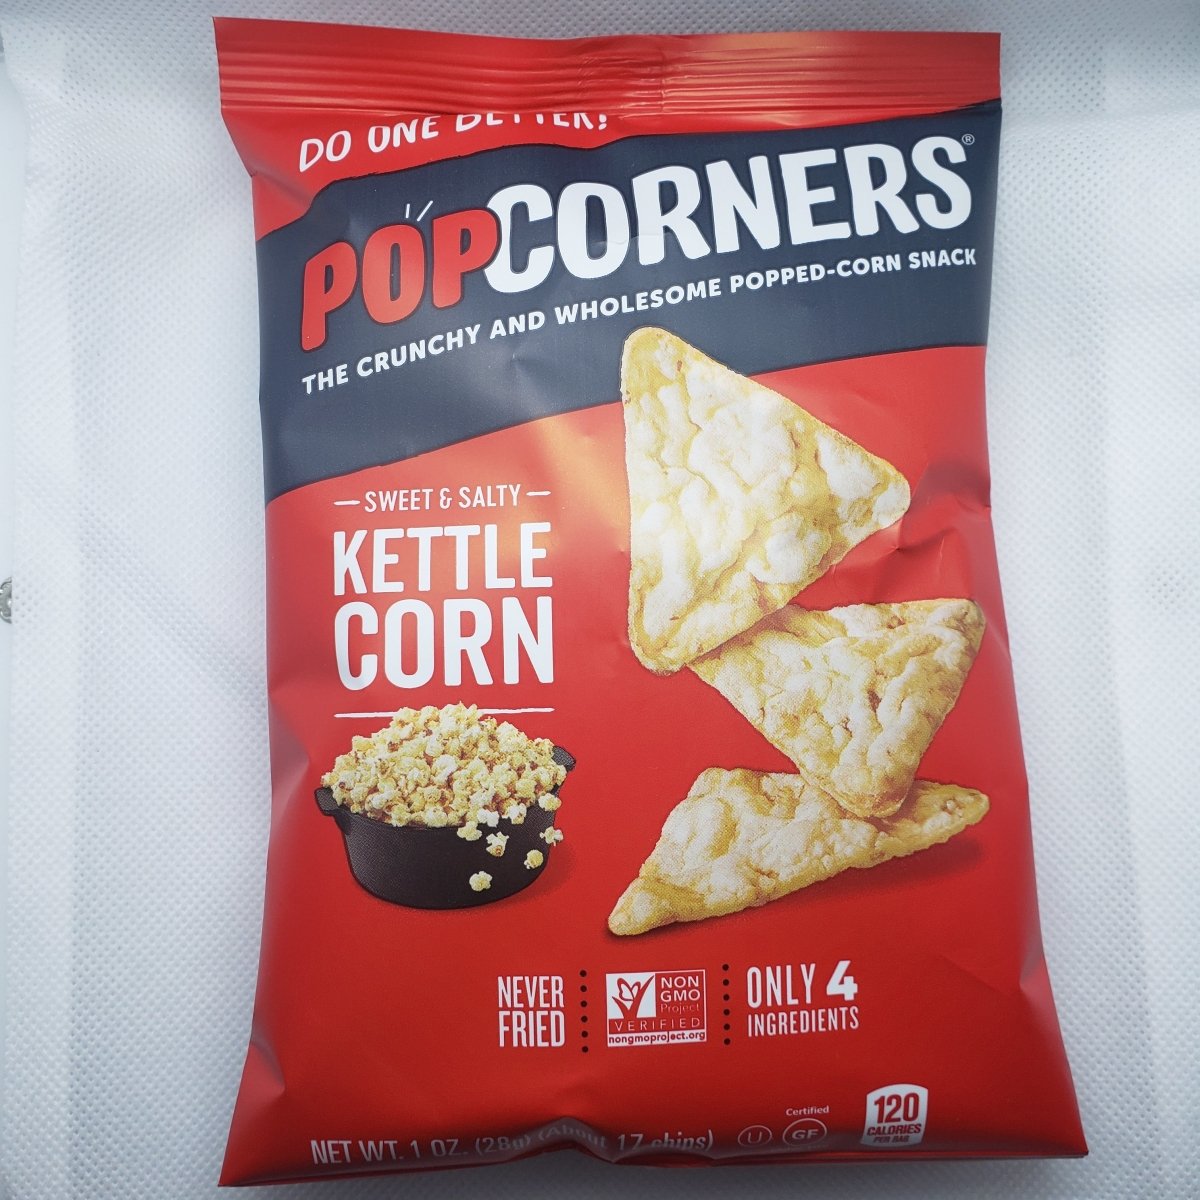 Pop Corners - Sweet and Salty - Kettle Corn - Popped-Corn Snack - 1oz